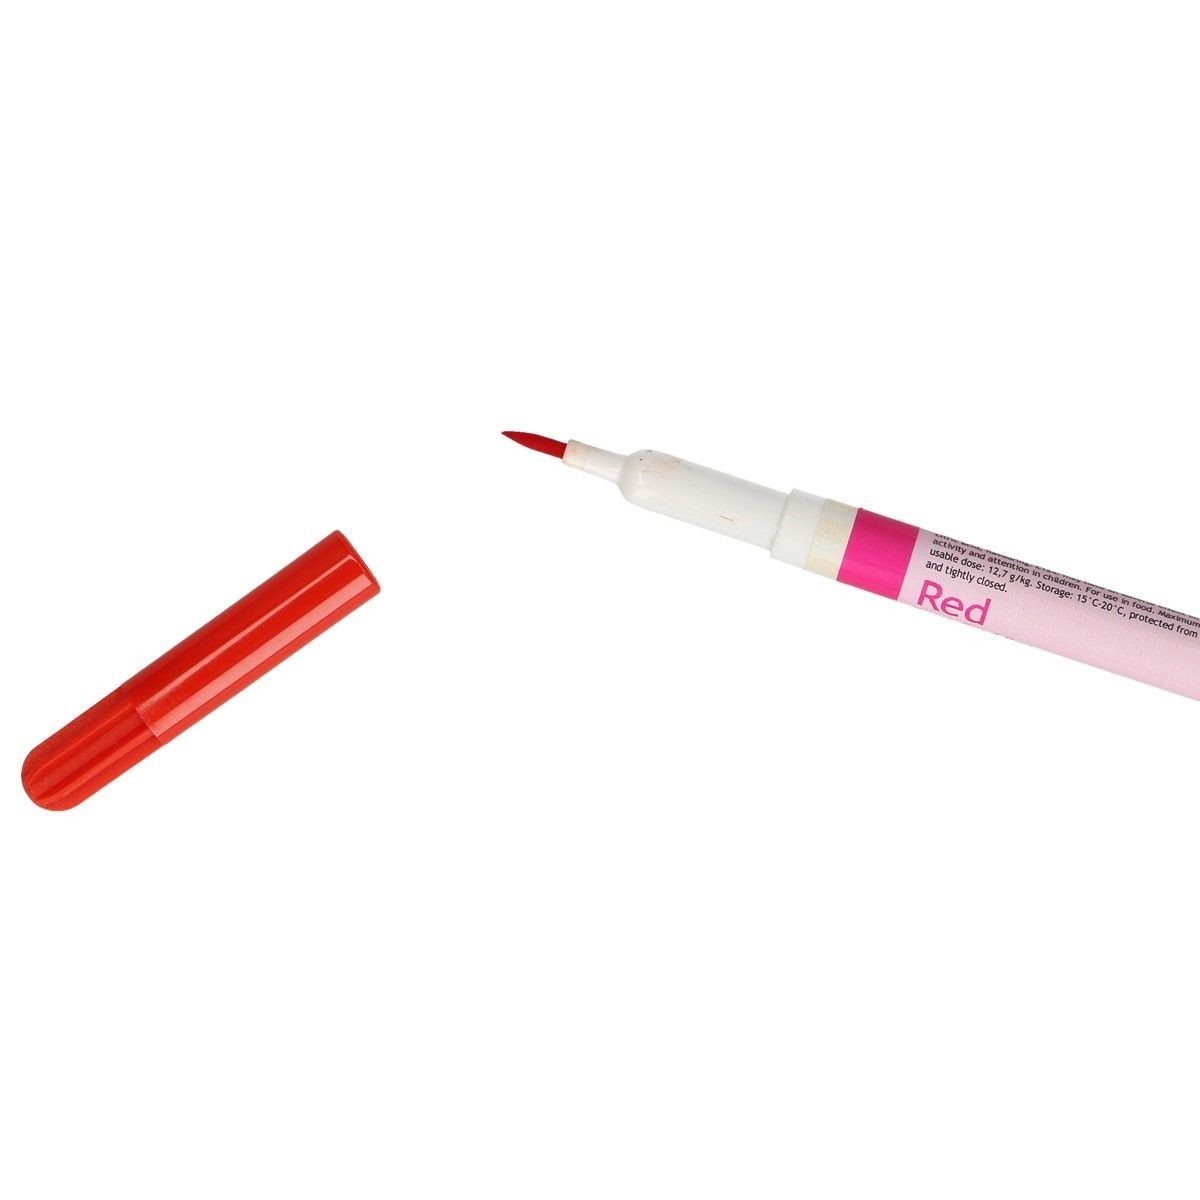 FunCakes Edible Brush Food Pen -RED -Βρώσιμος Μαρκαδόρος με Μύτη Πινέλου -Κόκκινος